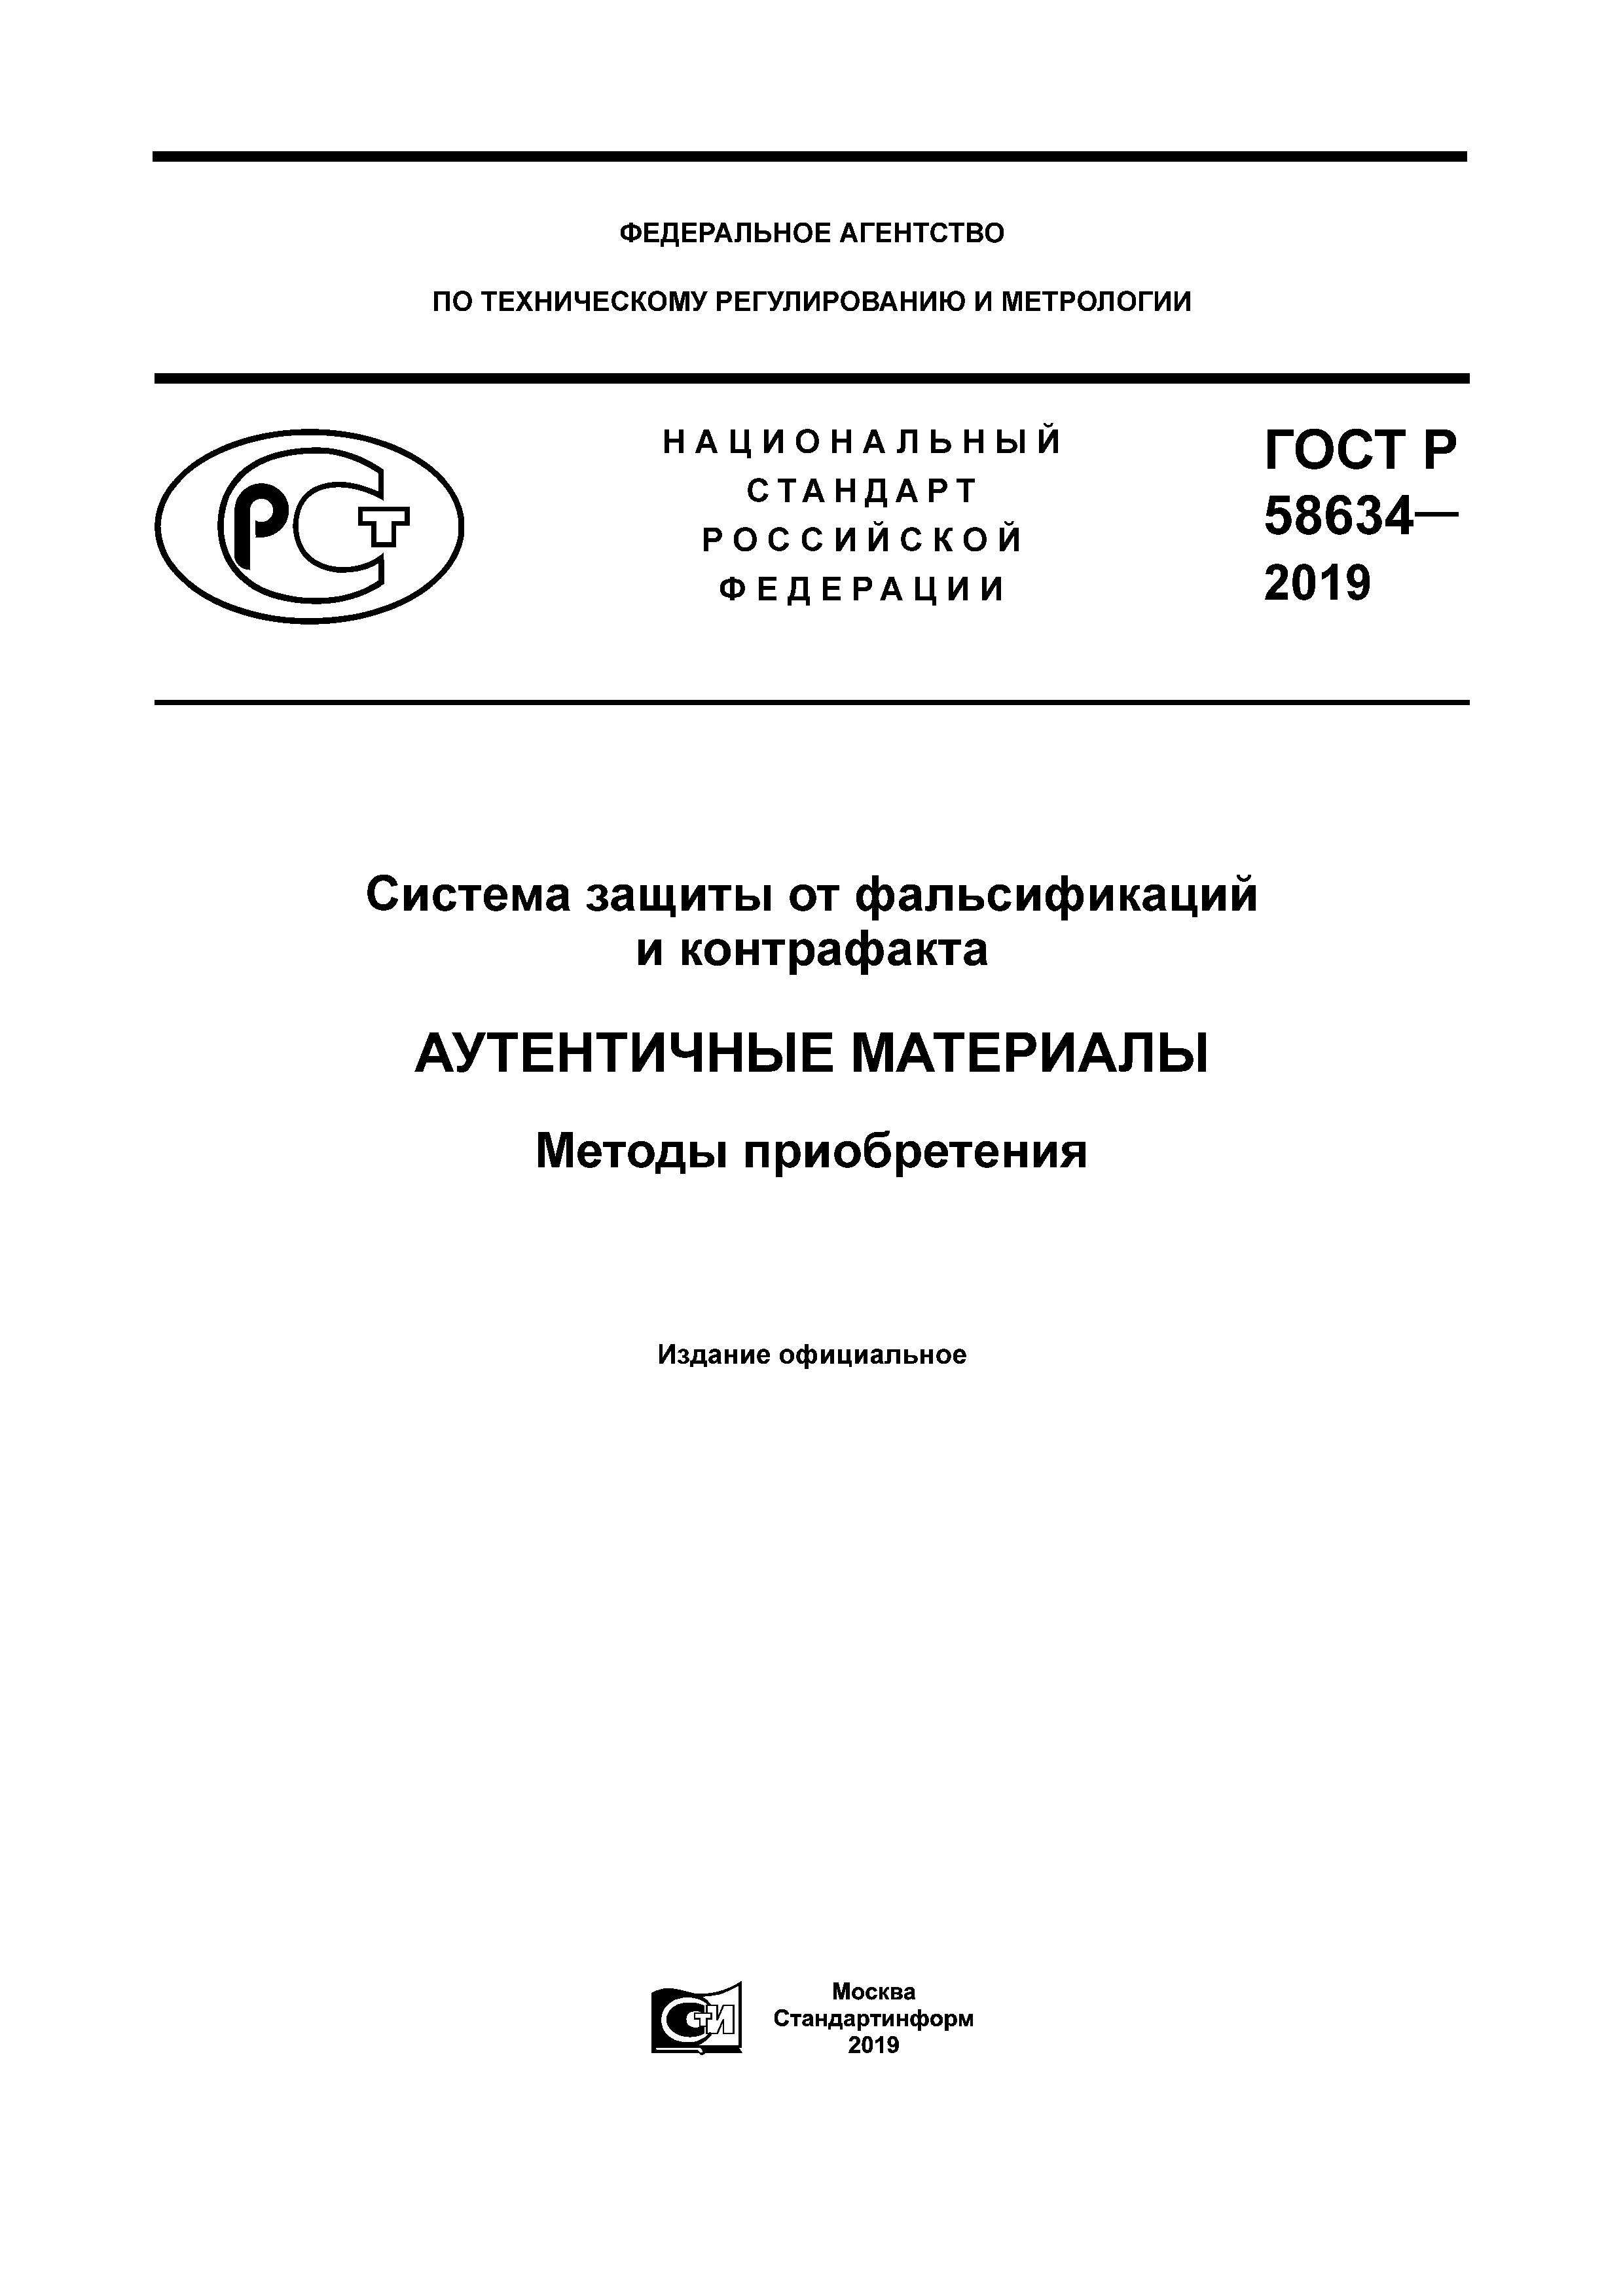 ГОСТ Р 58634-2019